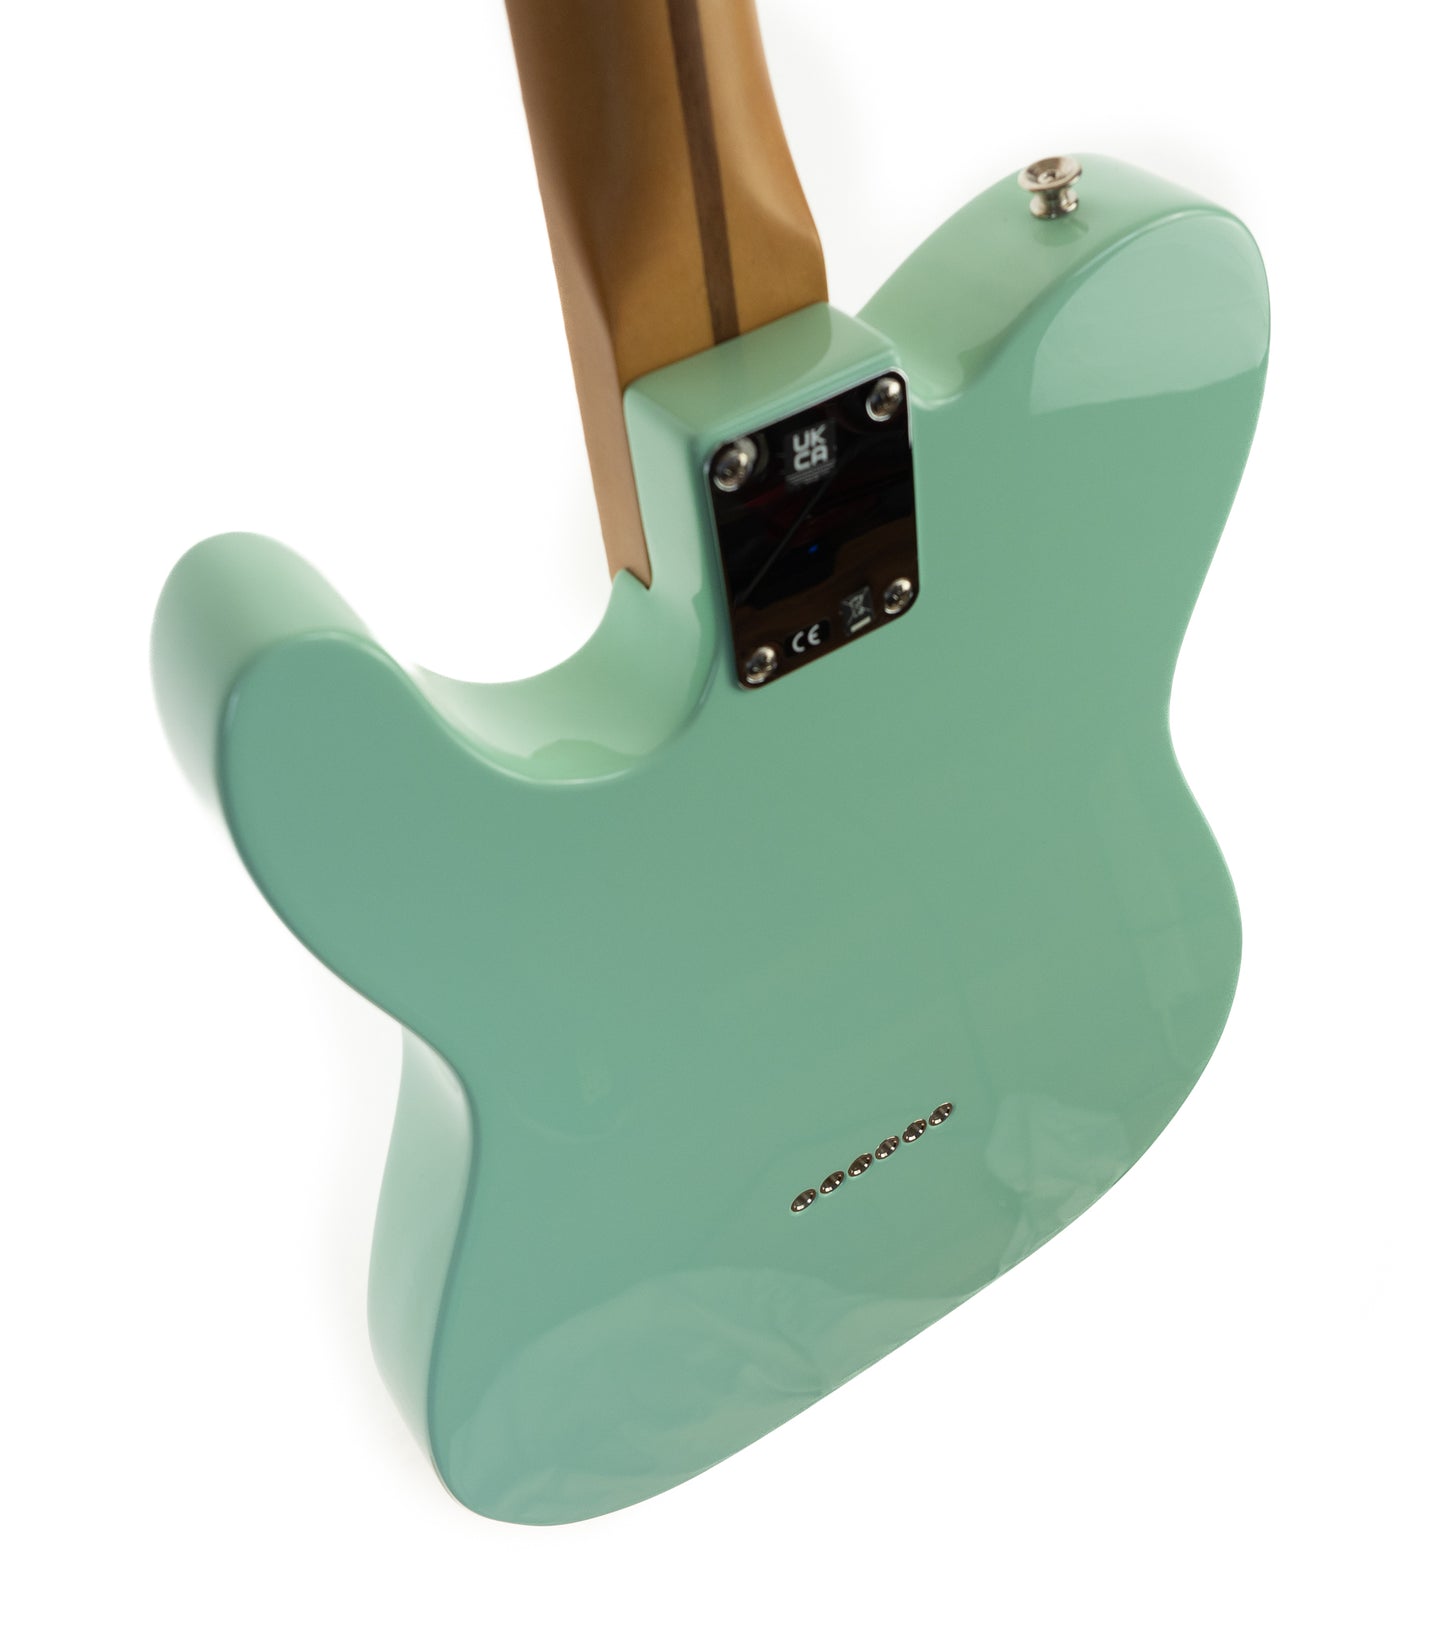 Fender Vintera 50s modified Telecaster Sea Foam Green electric guitar